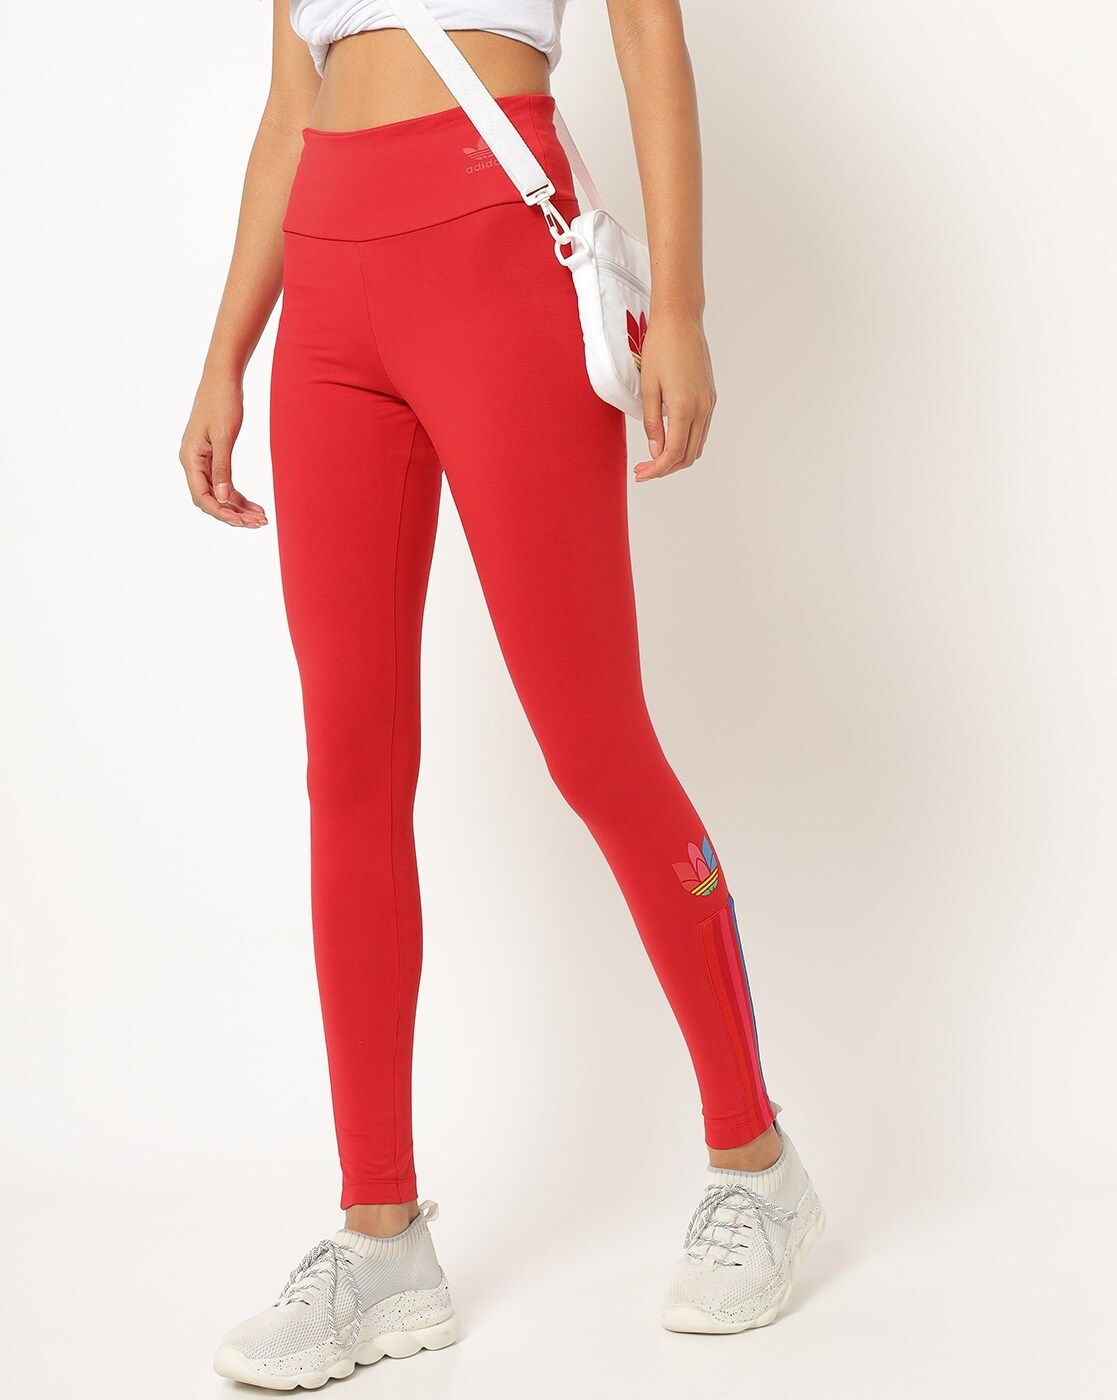 Buy Red Leggings for Women by Adidas Originals Online